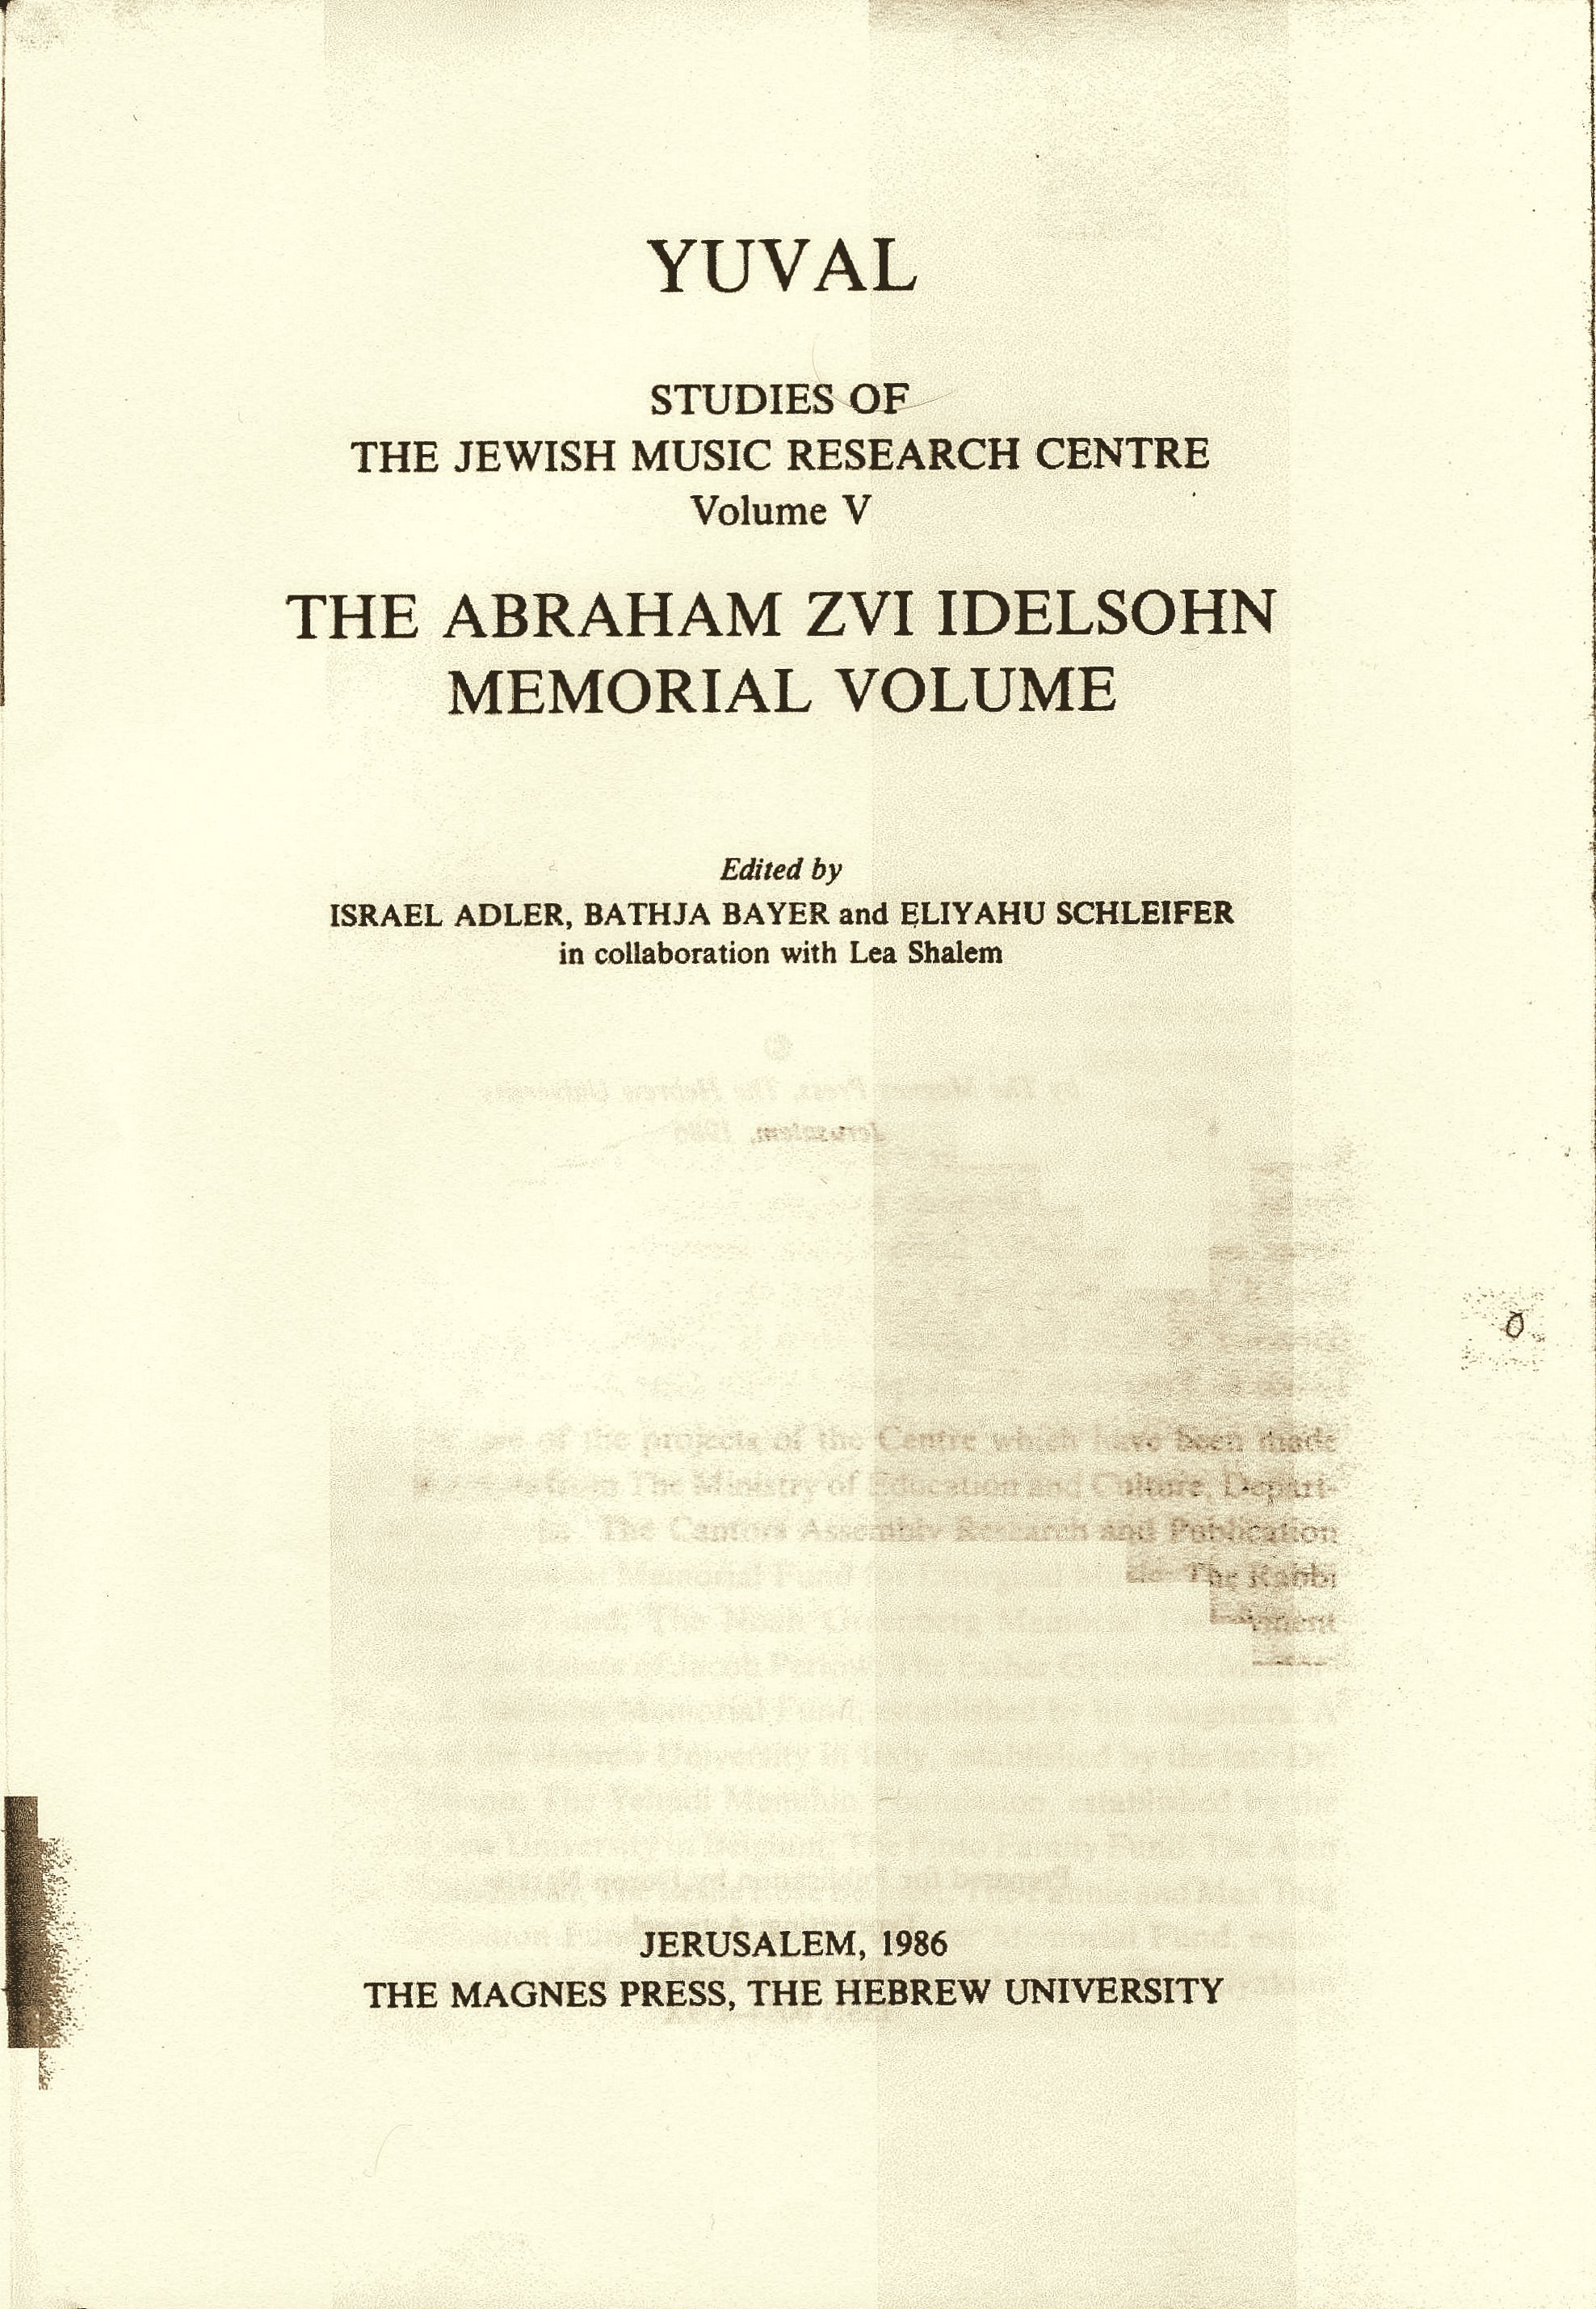 Yuval - Studies of the Jewish Music Research Center, vol. 5 - The Abraham Zvi Idelsohn Memorial Volume